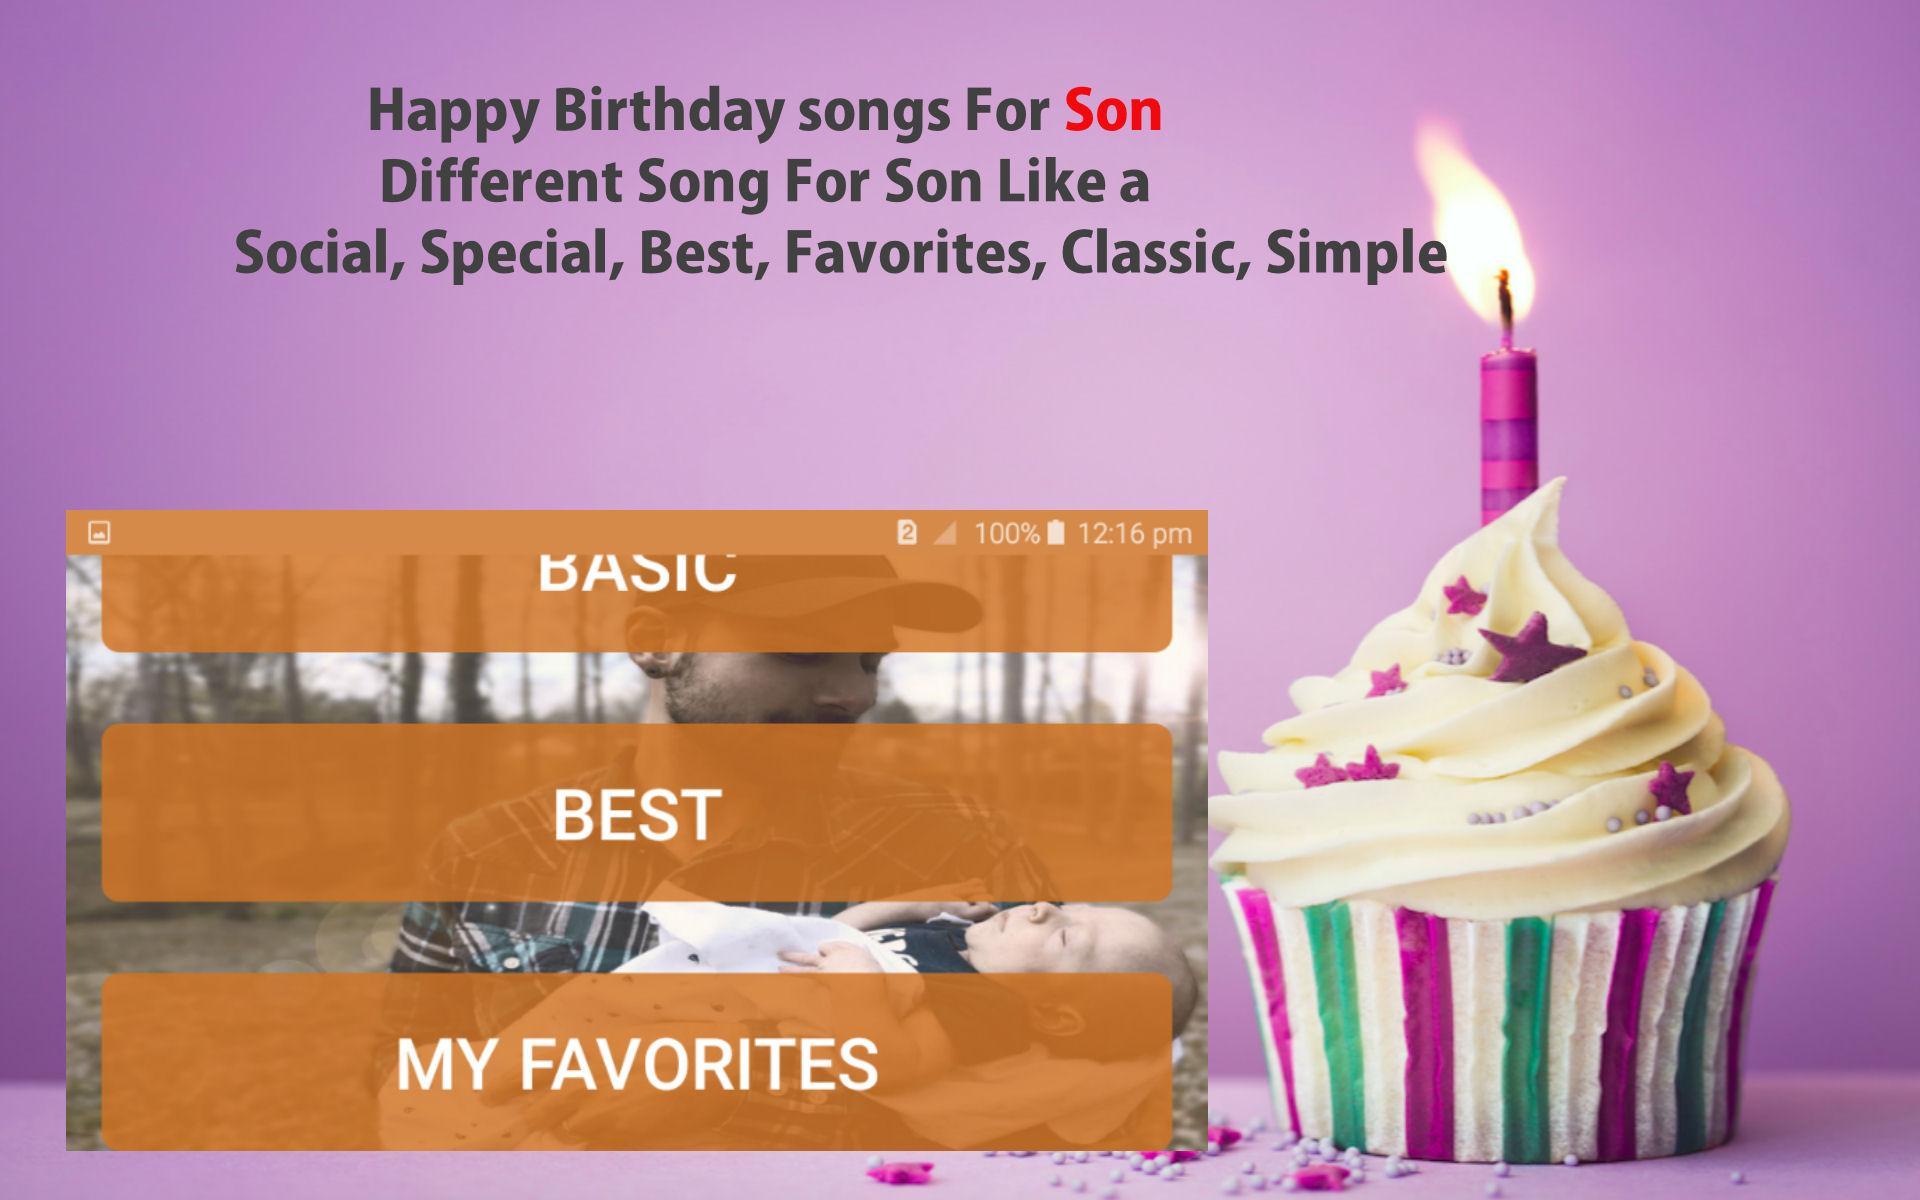 Happy Birthday песня. Happy Birthday с песней. Happy Birthday Song for son. 40 лет день рождения песня